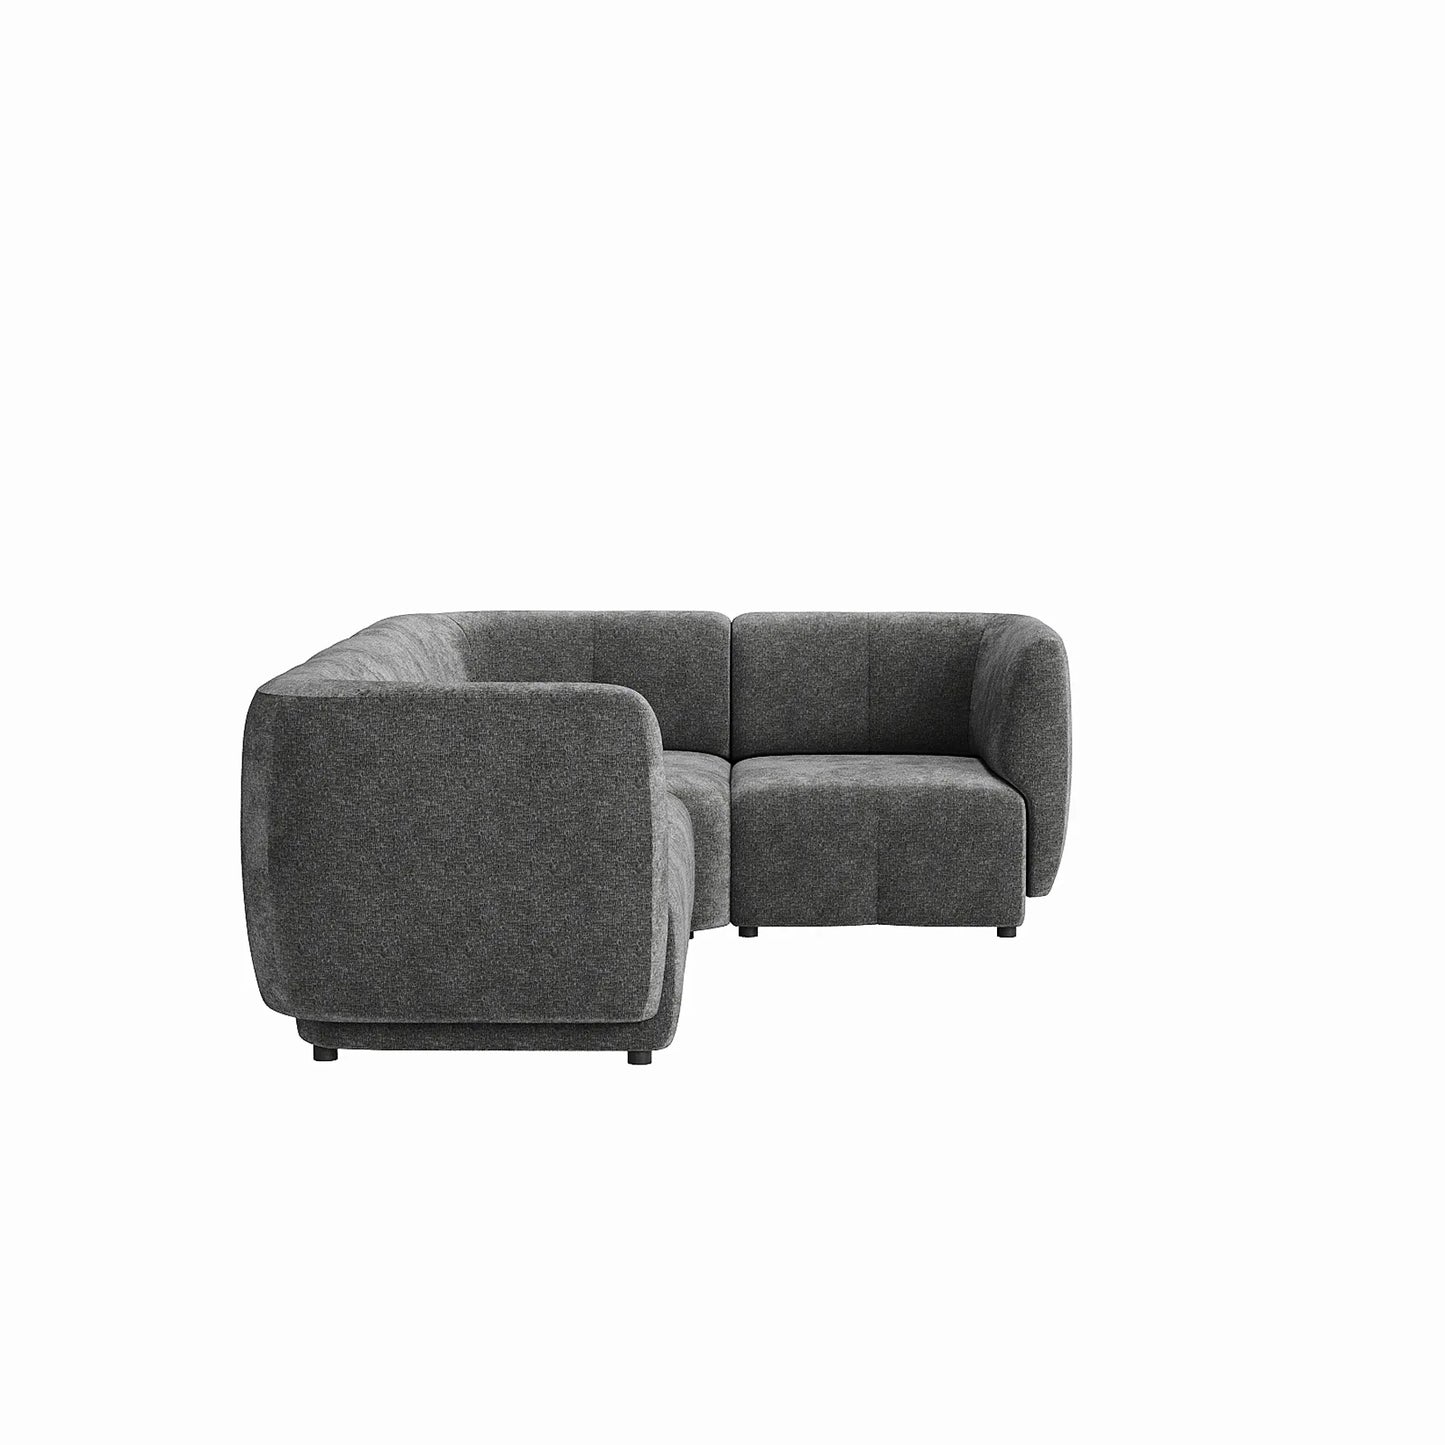 Plum RHF Chaise Sofa - City Grey